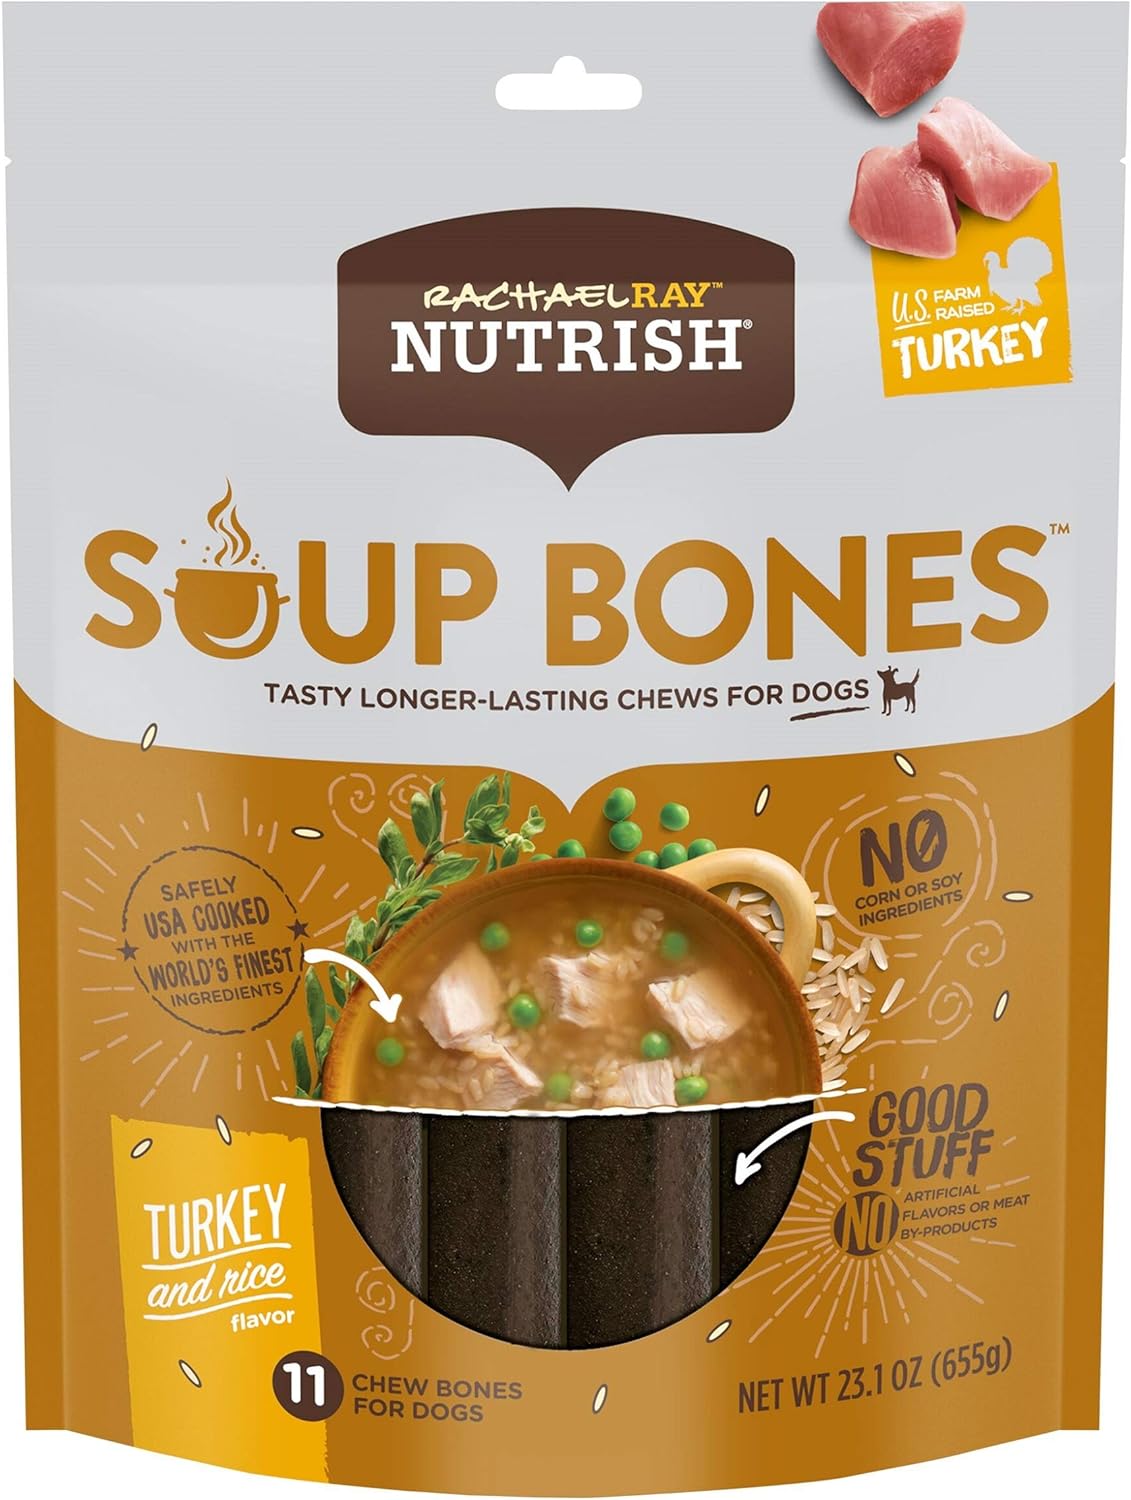 Rachael Ray Nutrish Soup Bones Dog Treats, Turkey & Rice Flavor, 11 Bones